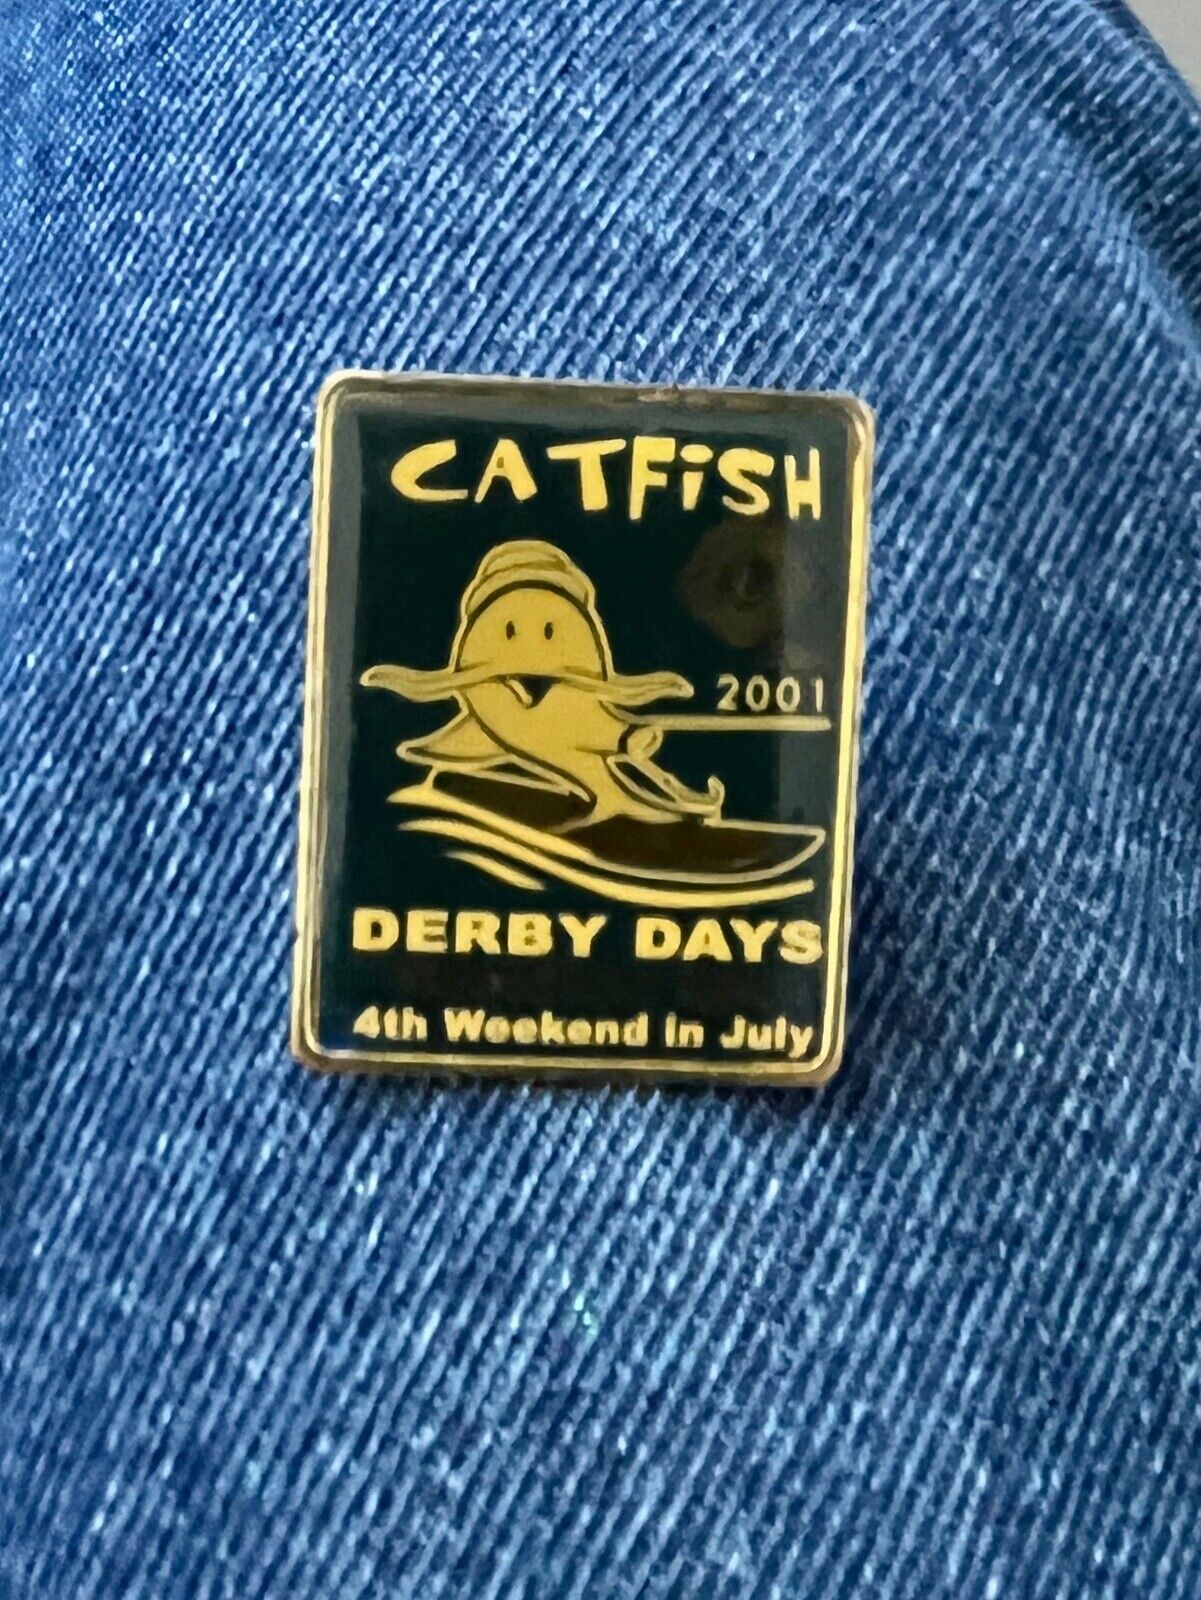 2001 Lions Club Catfish Derby Days Franklin, Minnesota 4th Weekend In July